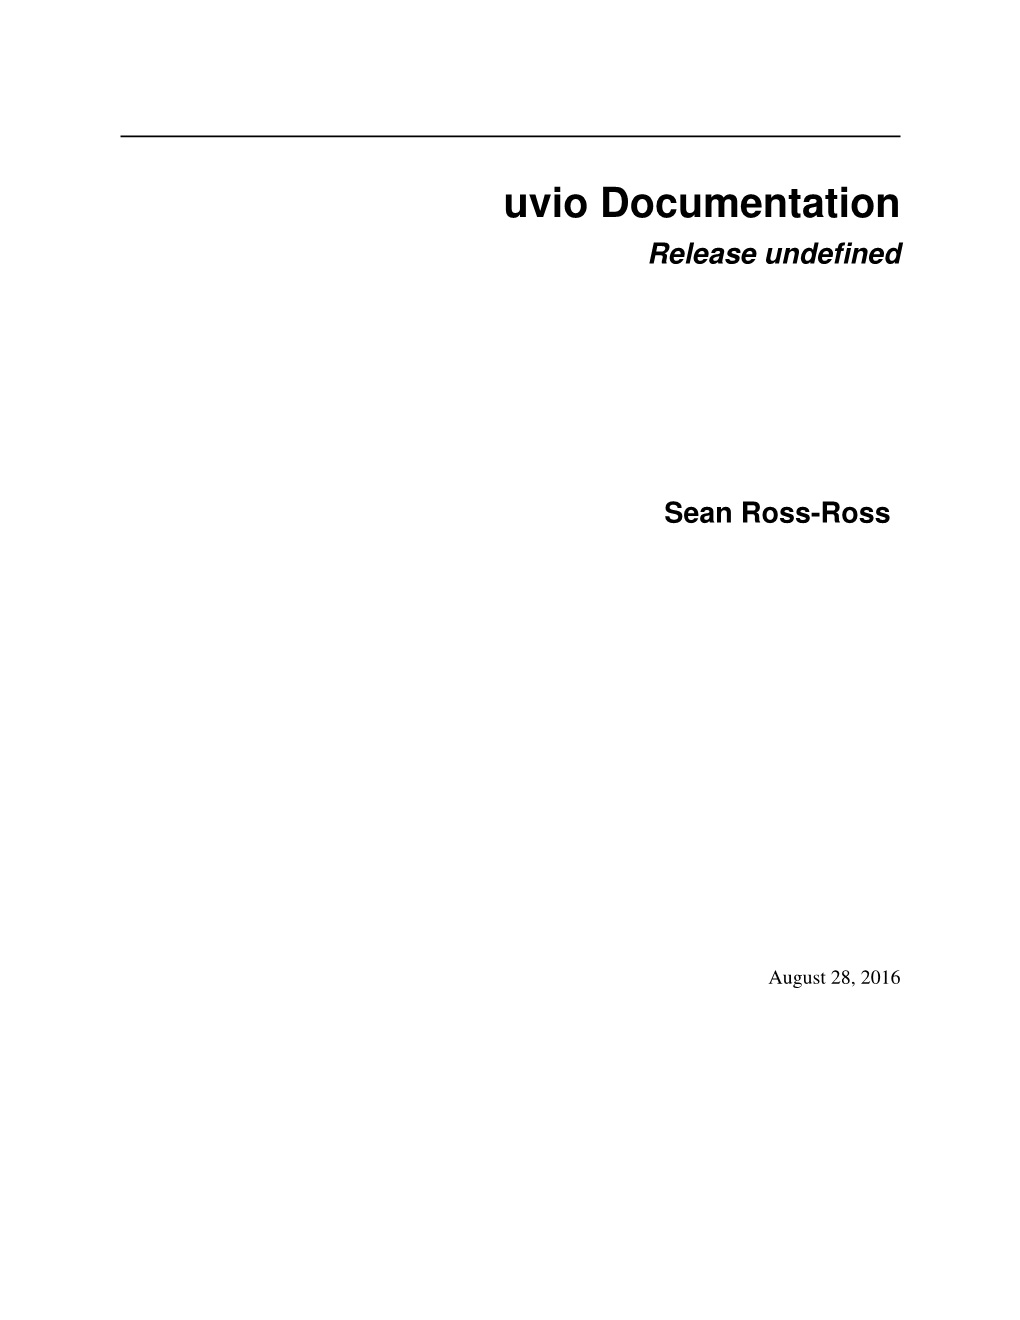 Uvio Documentation Release Undeﬁned